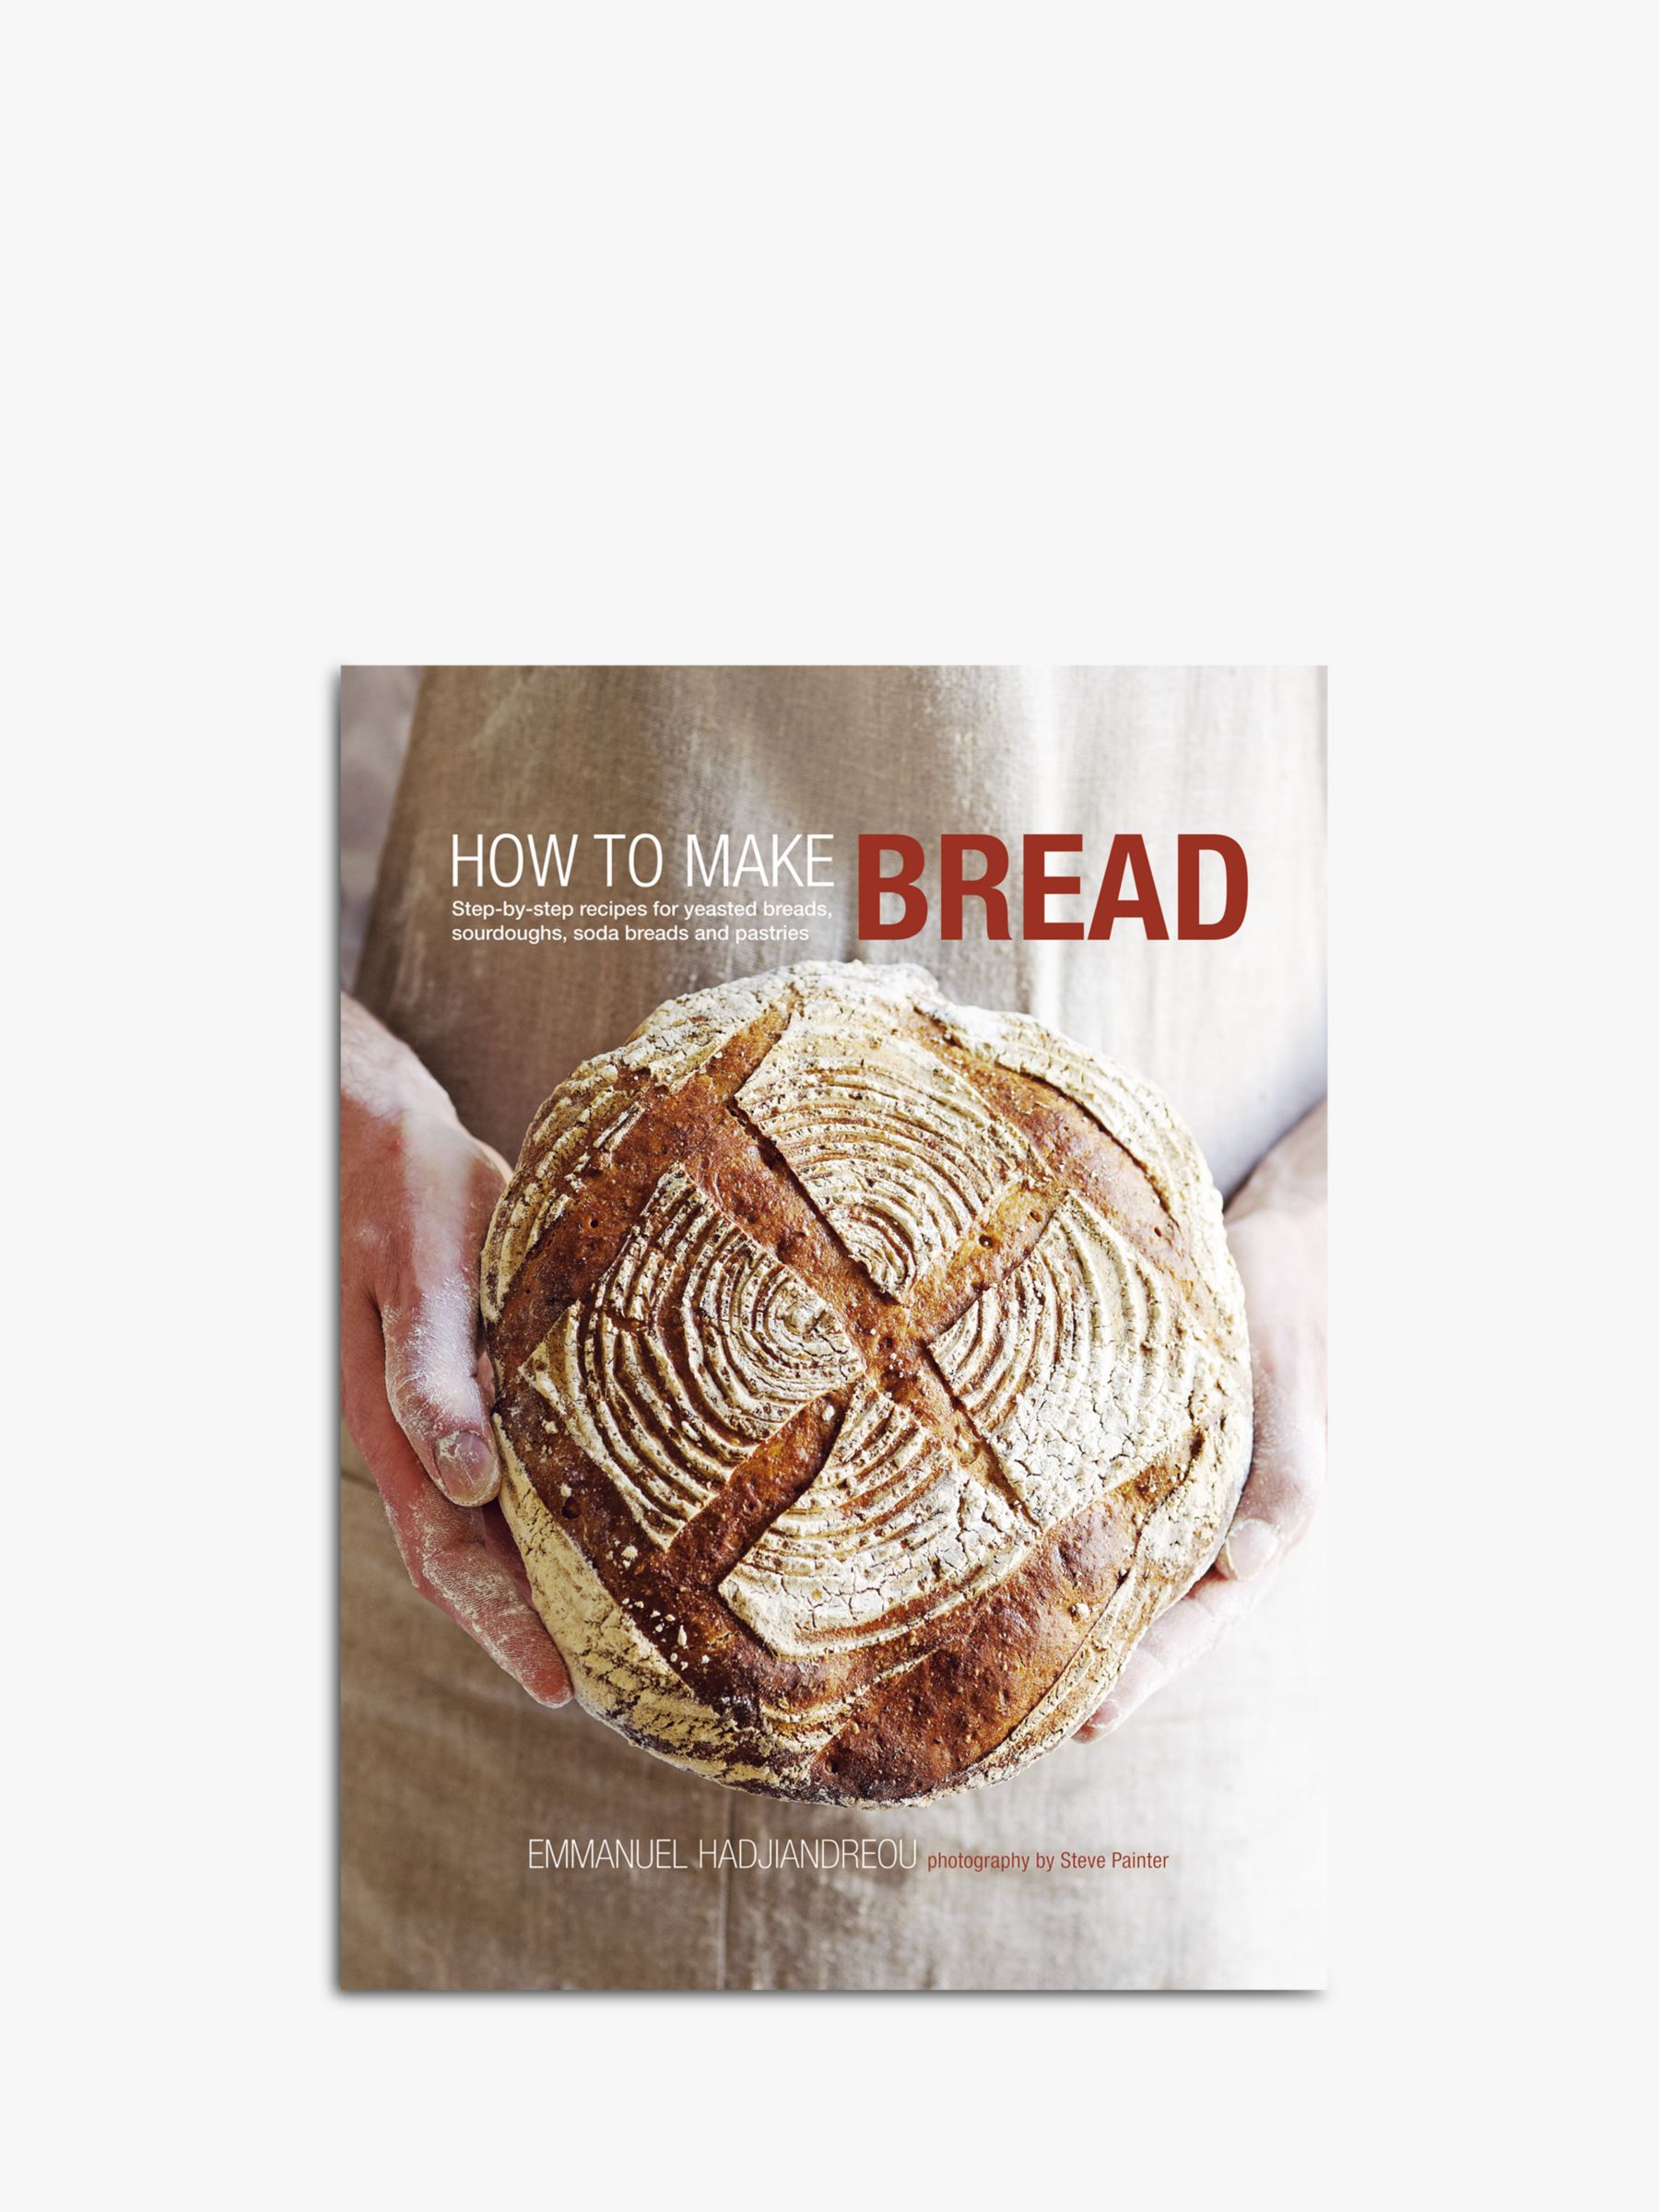 How To Make Bread - Emmanuel Hadjiandreou Cookbook